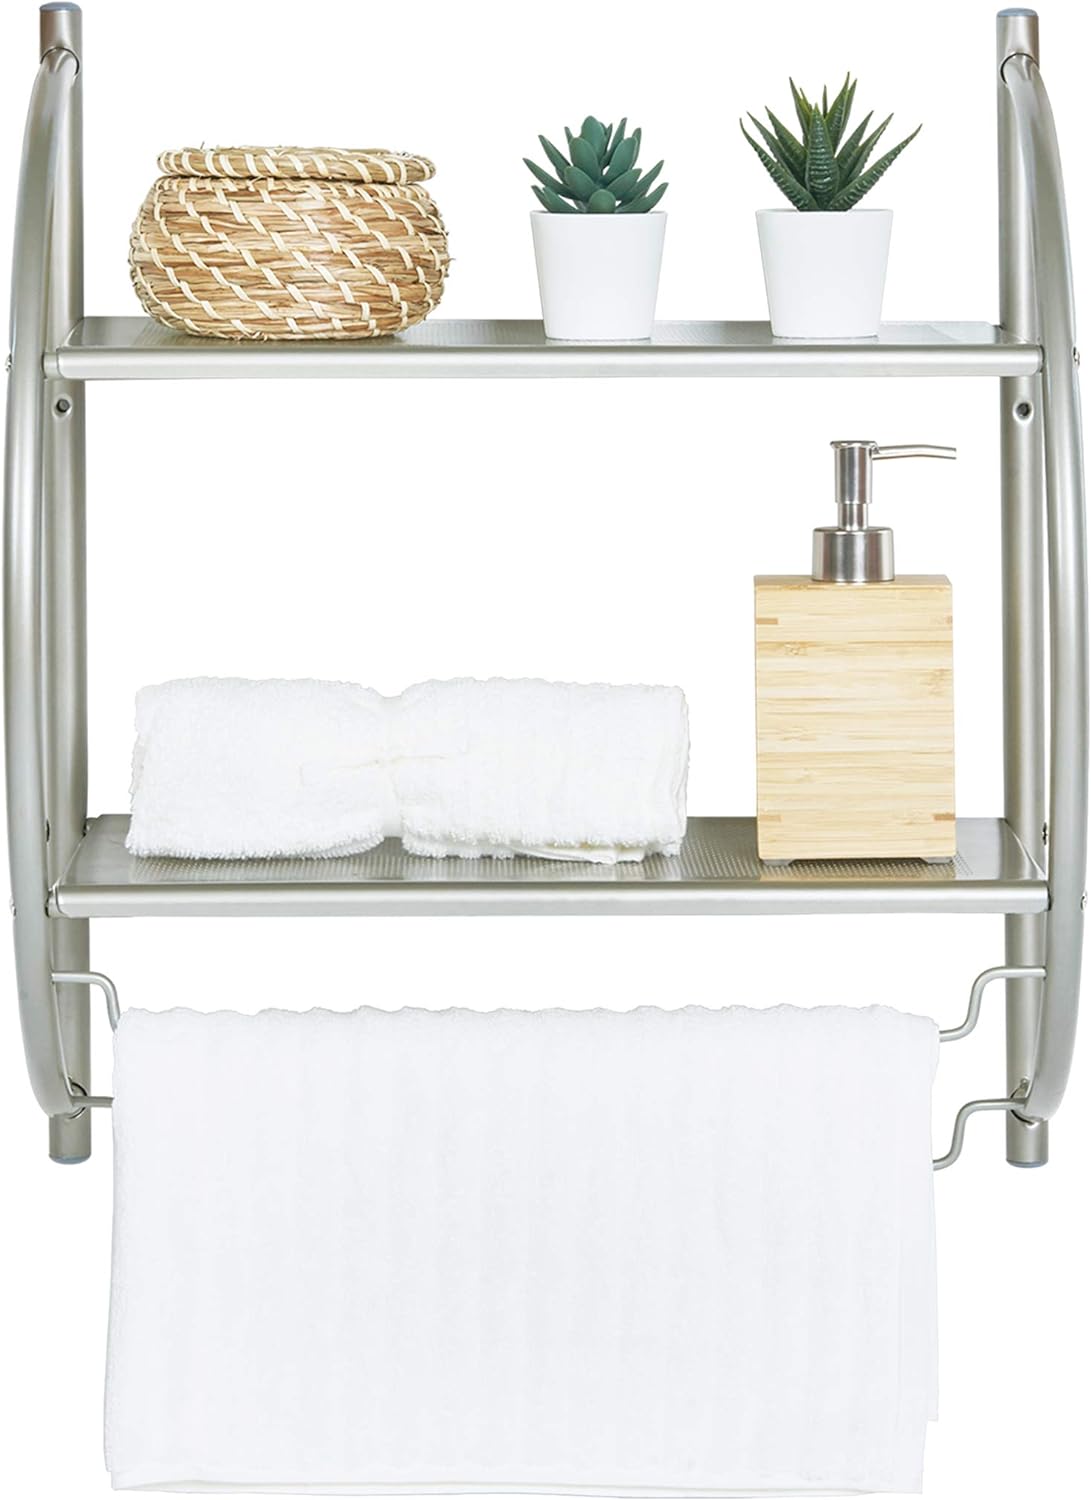 Homebase Double Wall Mount Bathroom Shelf with Towel Bars, 18"L X 10"D X 22"H, Satin Nickel Bathroom Shelf, 2 Shelves Wal